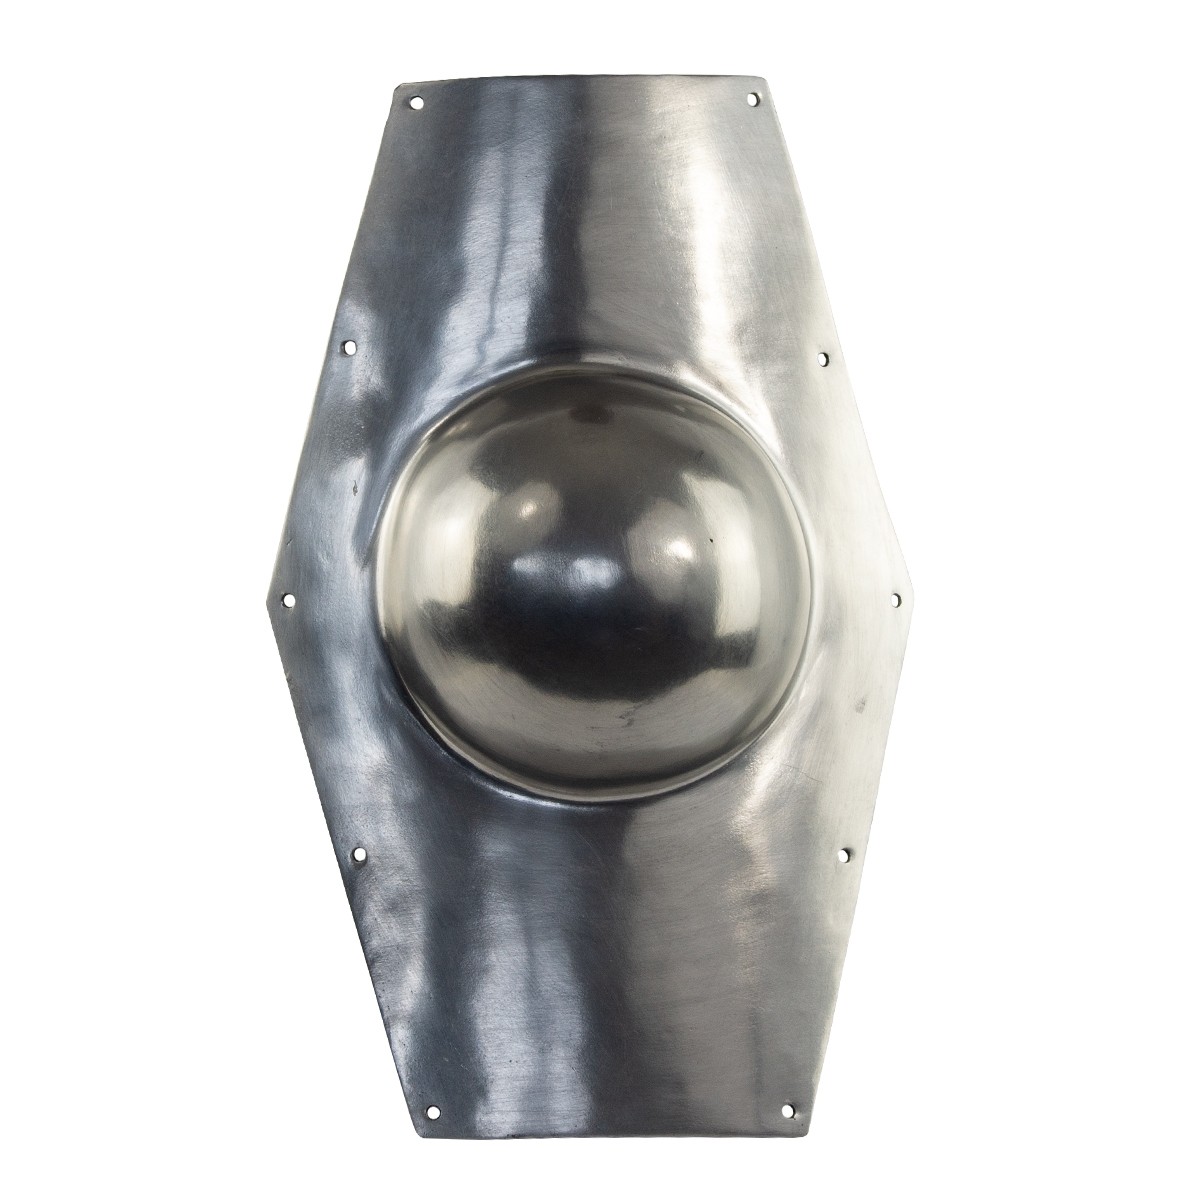 Rectangular shield boss with round edges (tinned steel)